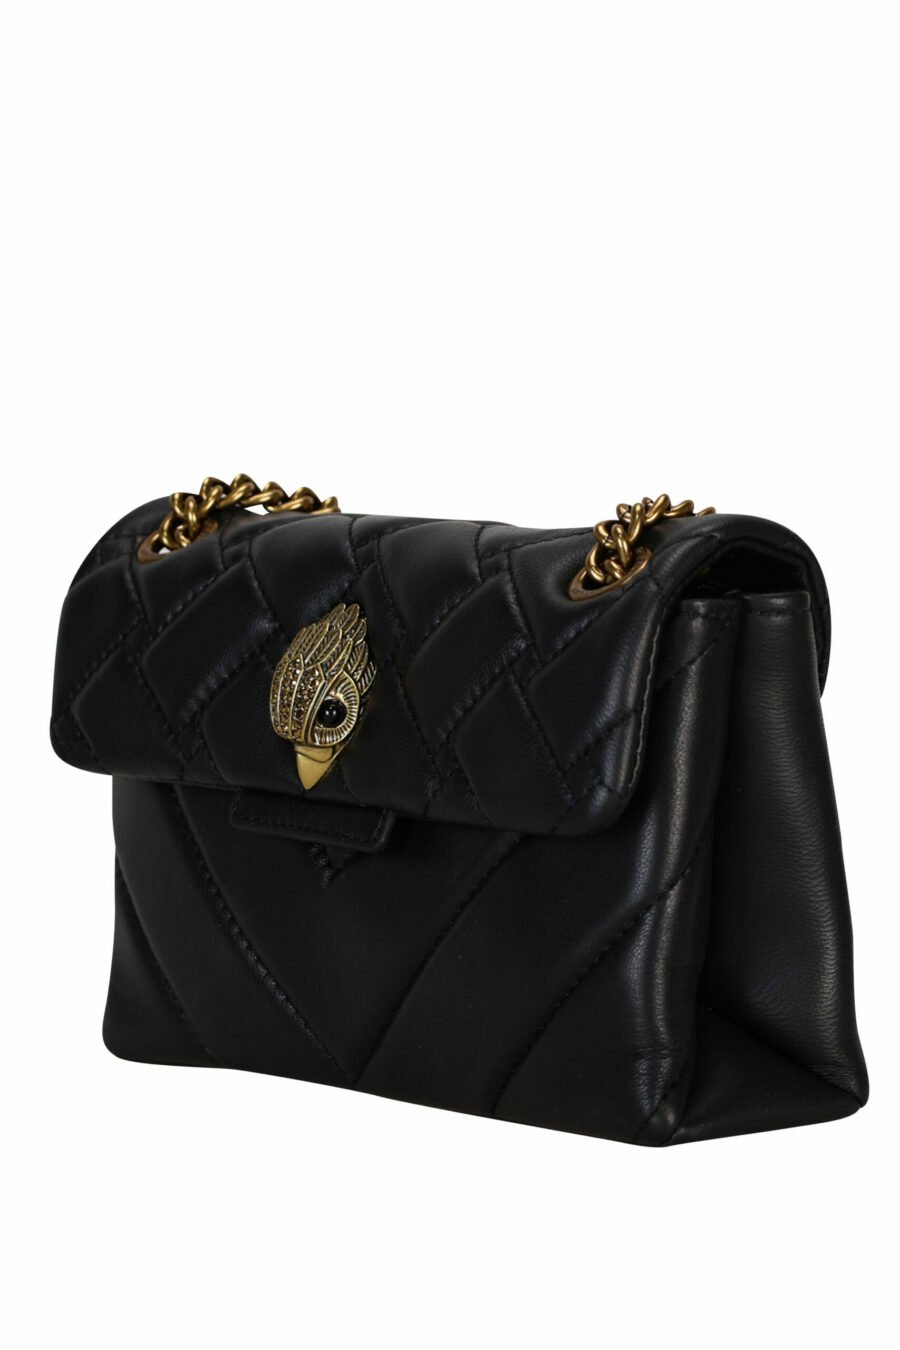 Mini black quilted shoulder bag with golden eagle logo with black crystals - 5057720813637 1 scaled